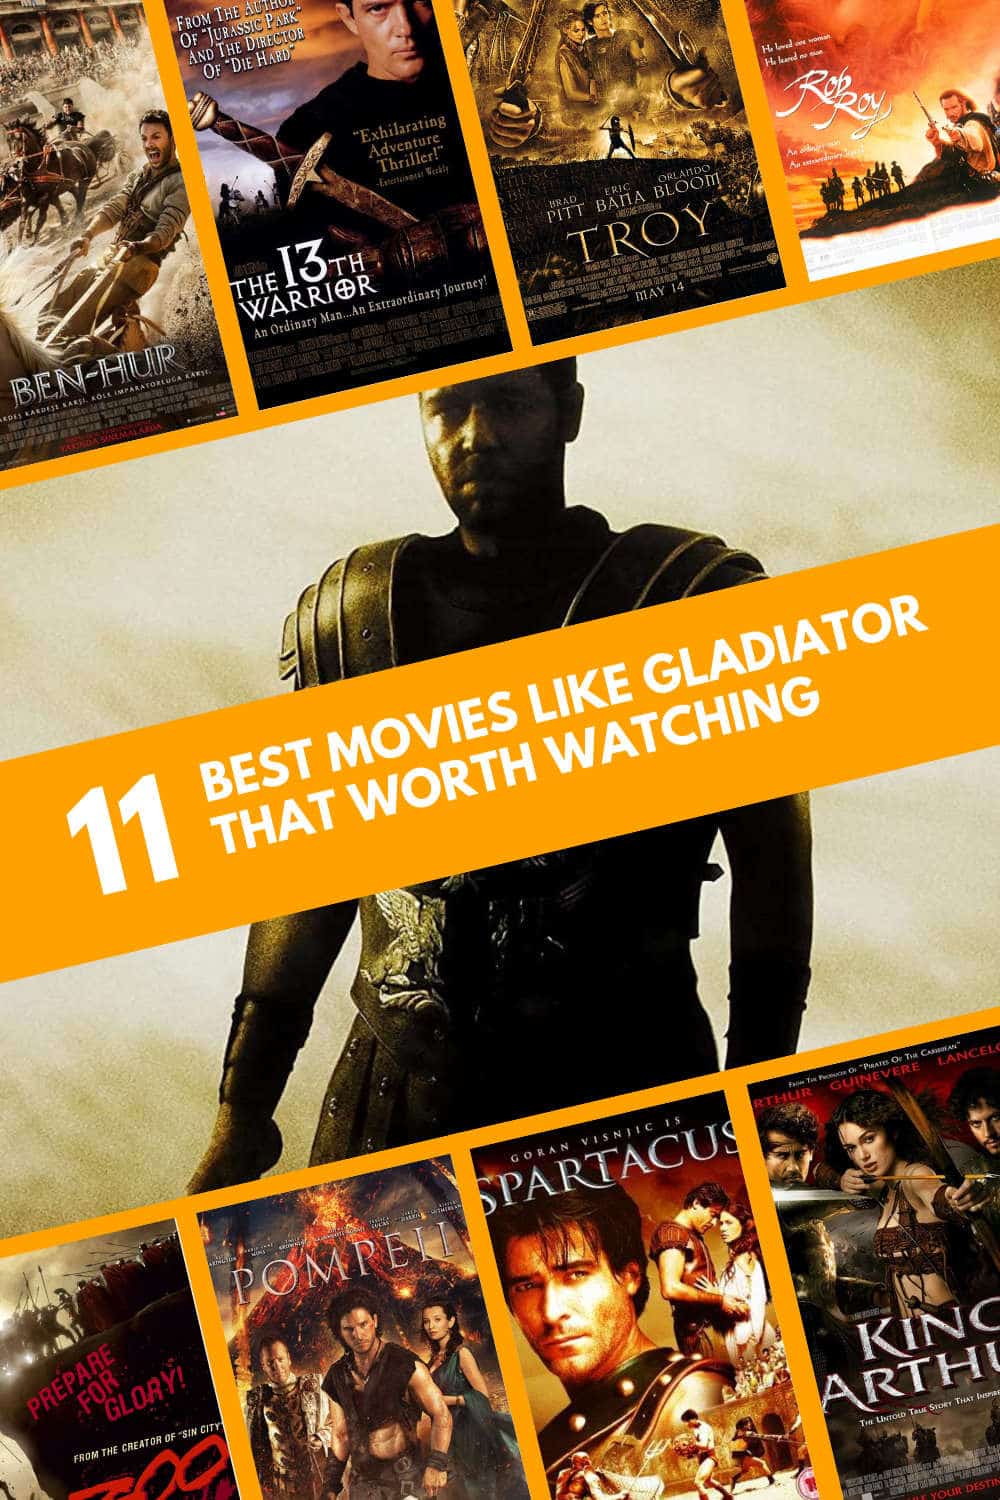 Movies Like Gladiator That Worth Watching